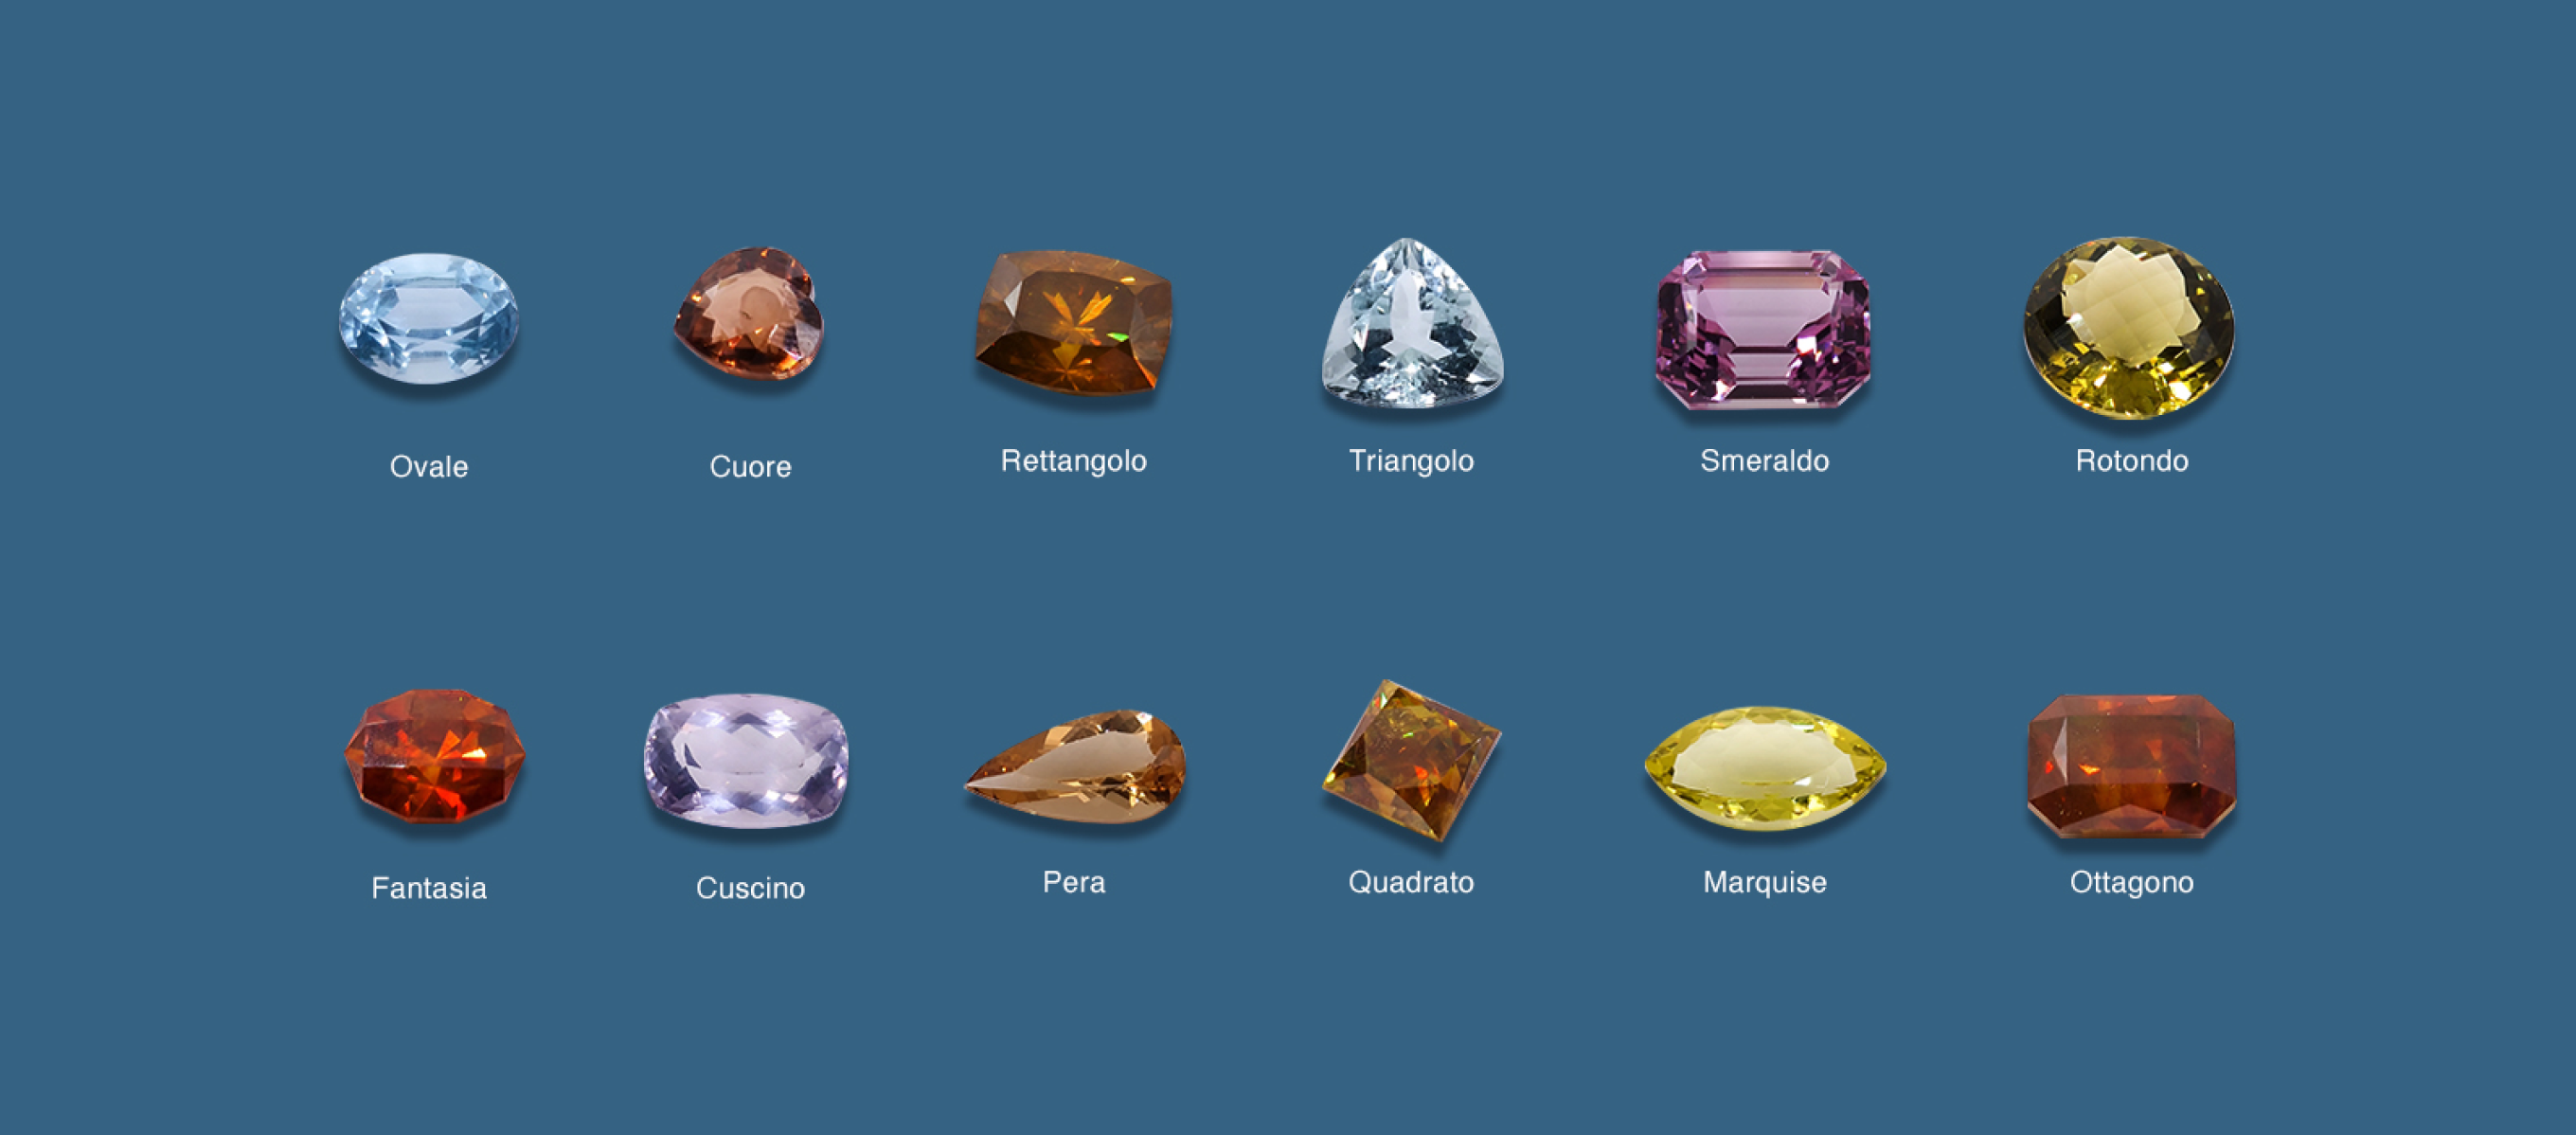 Capricci gem cut types